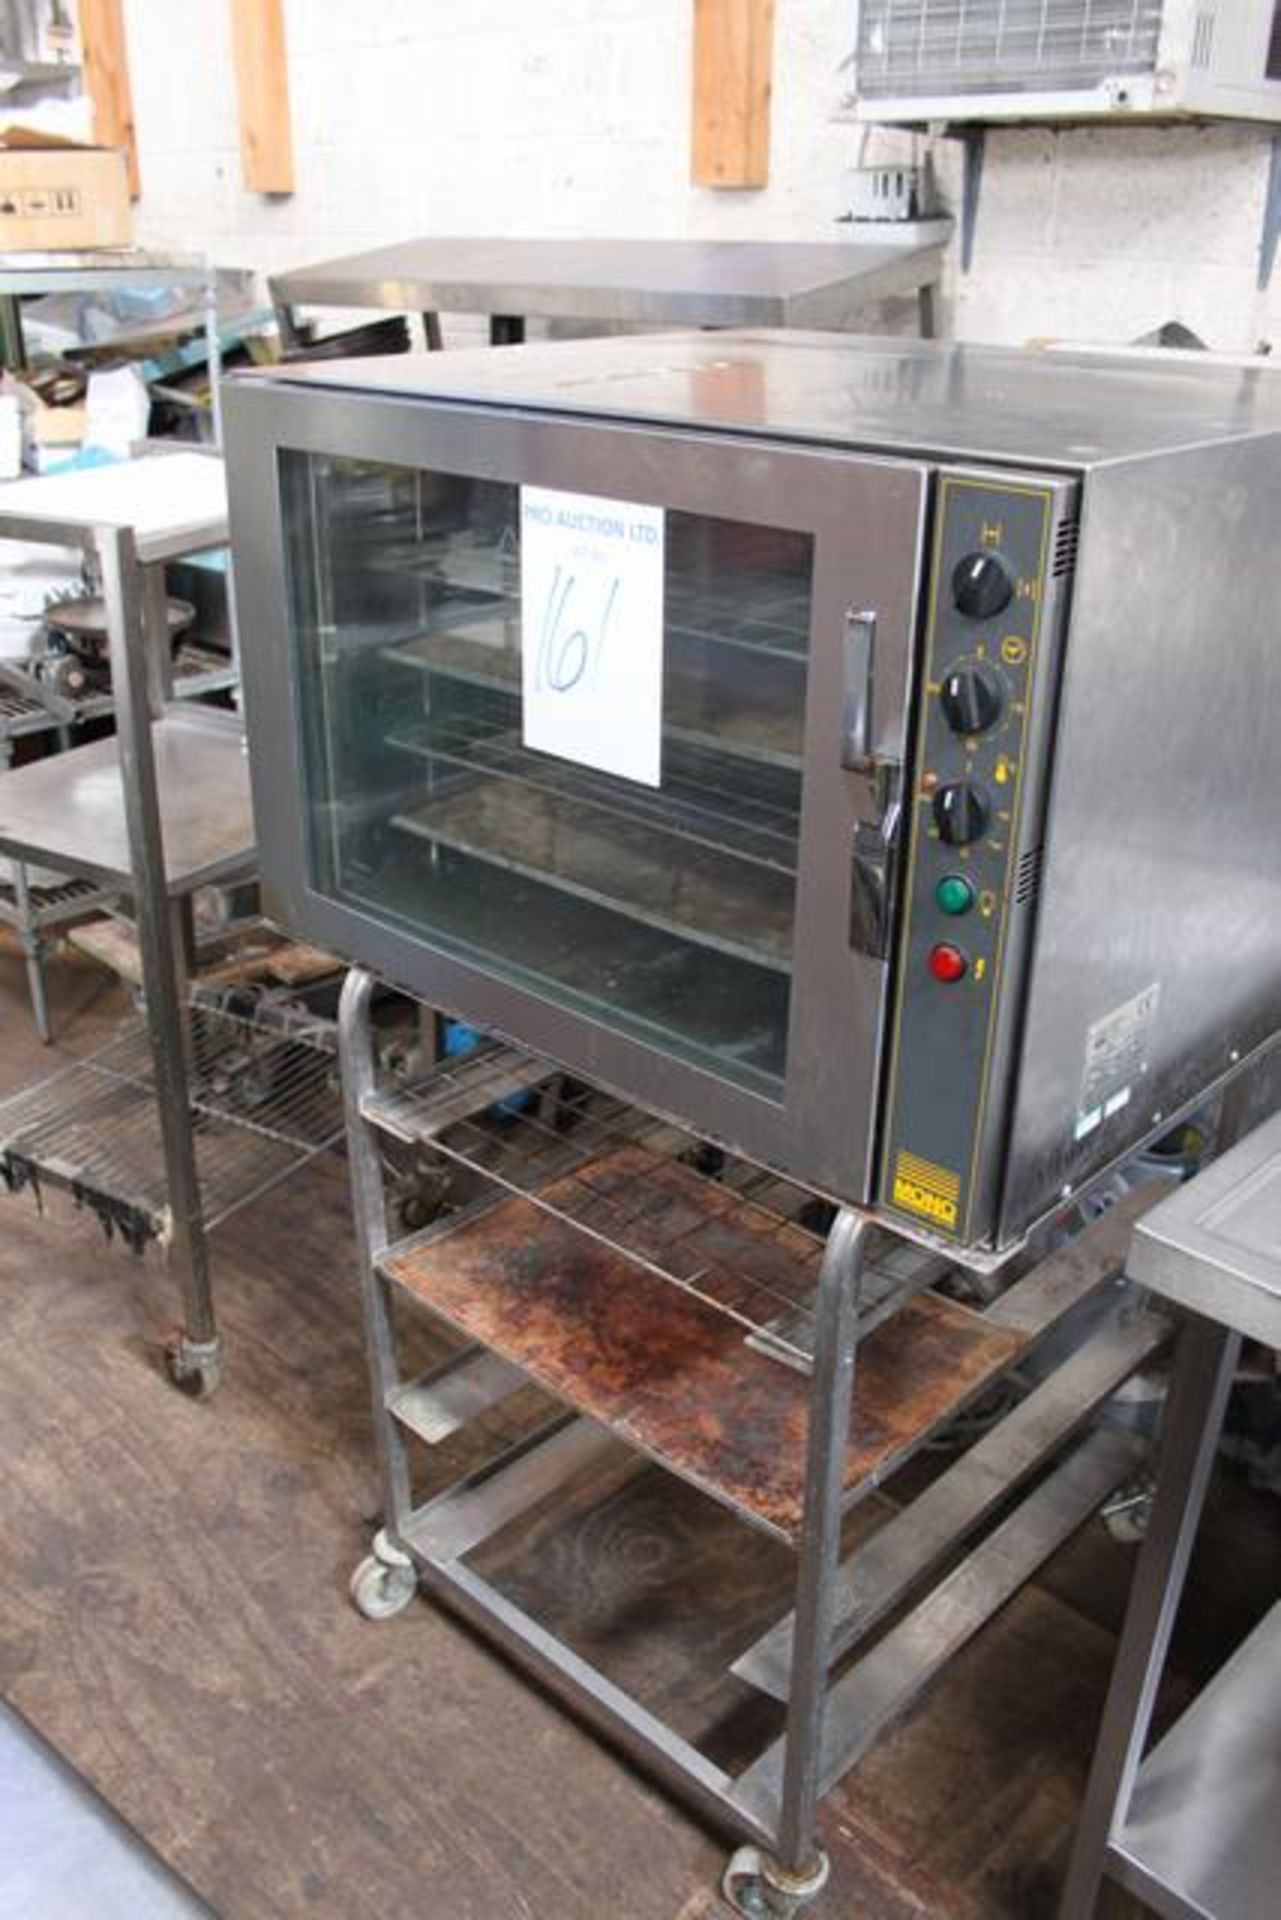 Mono model FG 154 bake off oven SN 089852241